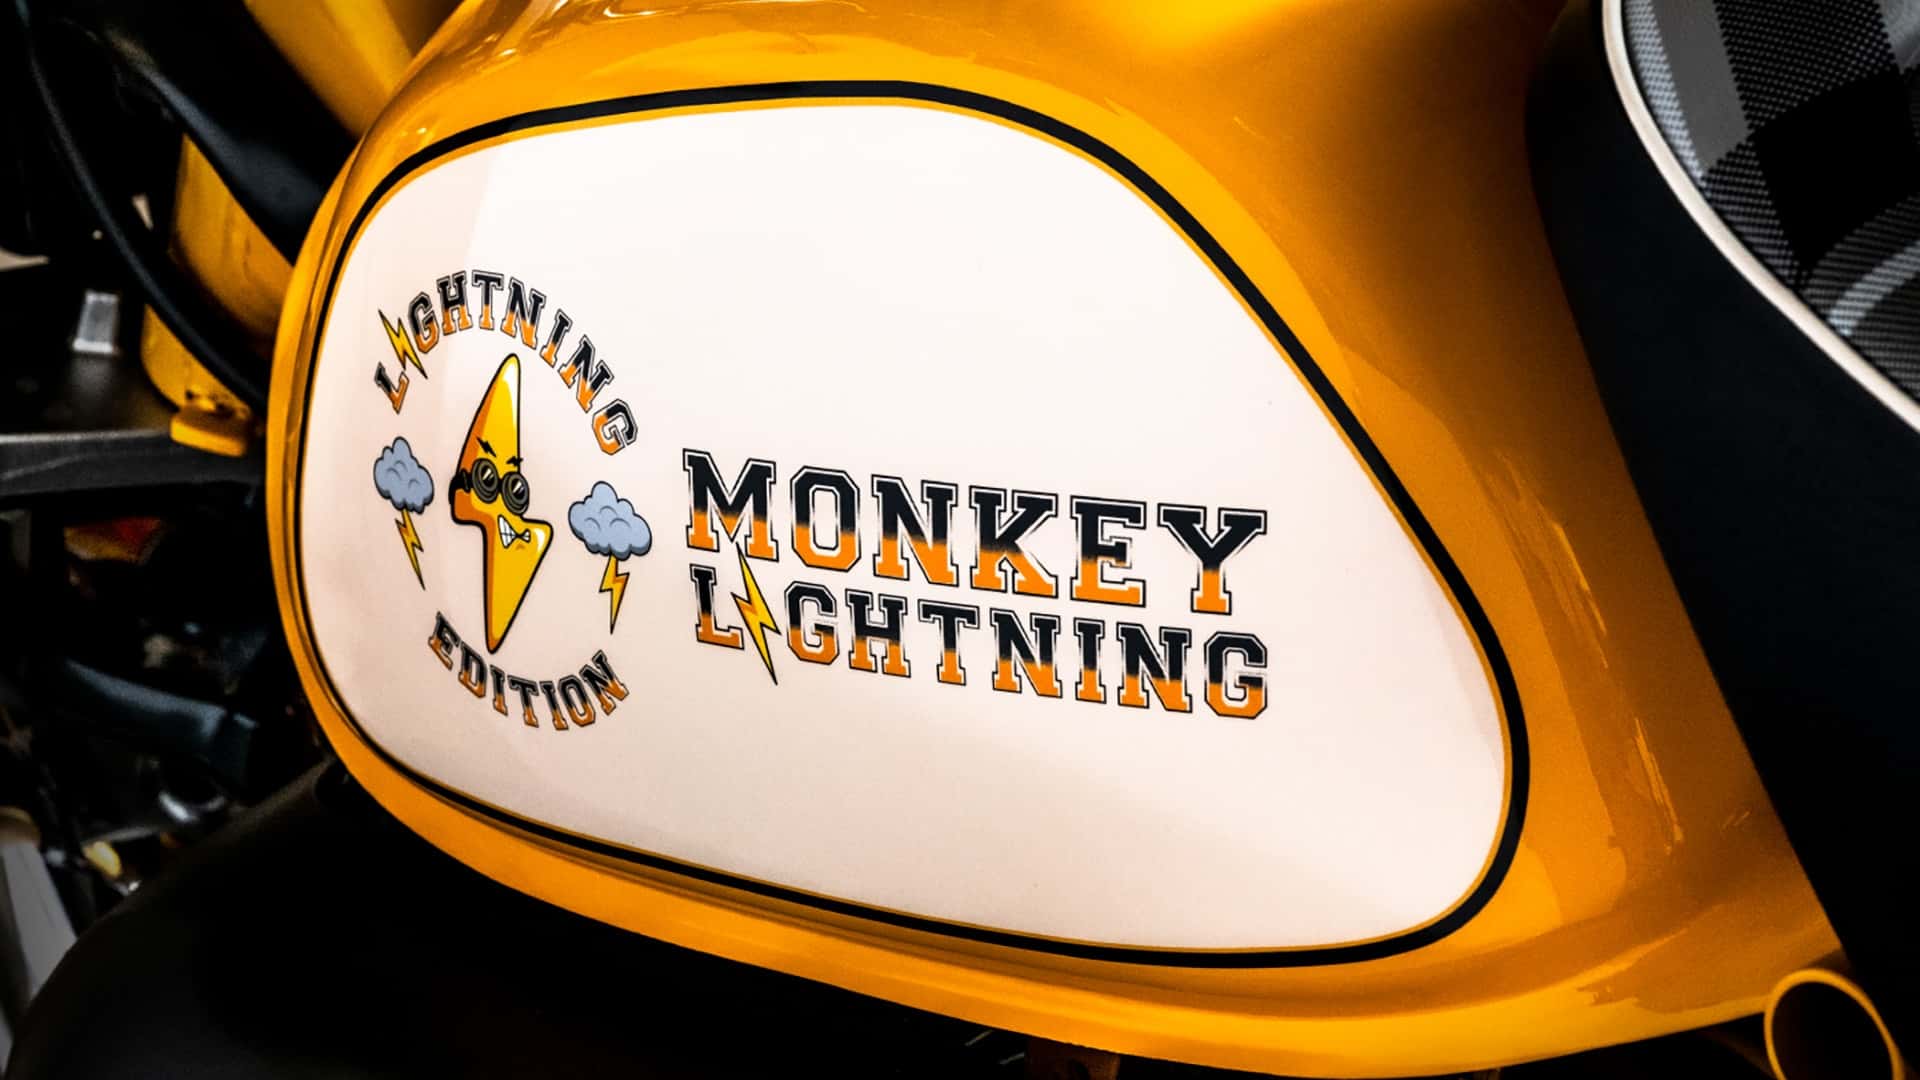 Honda Monkey 125 Lightning Edition Makes Official Debut - Details and Photos - closeup